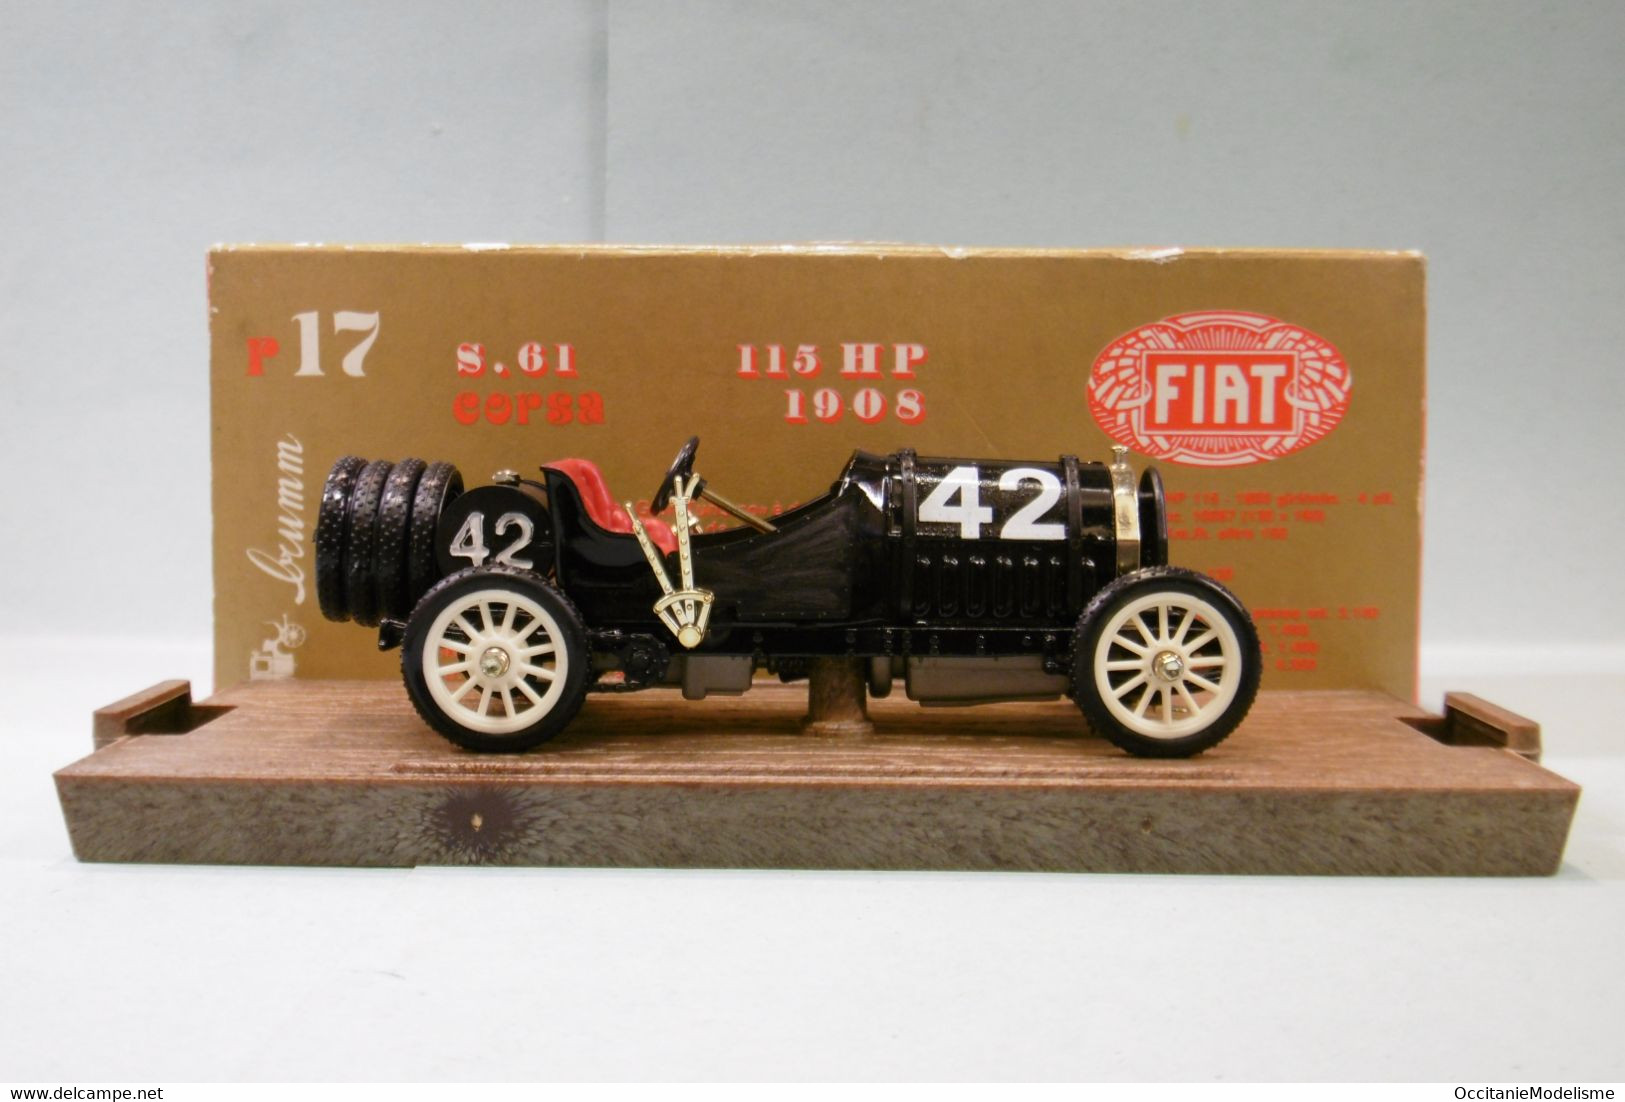 Brumm - FIAT 115 HP S.61 Corsa 1908 #42 Noir Réf. R17 BO 1/43 - Brumm